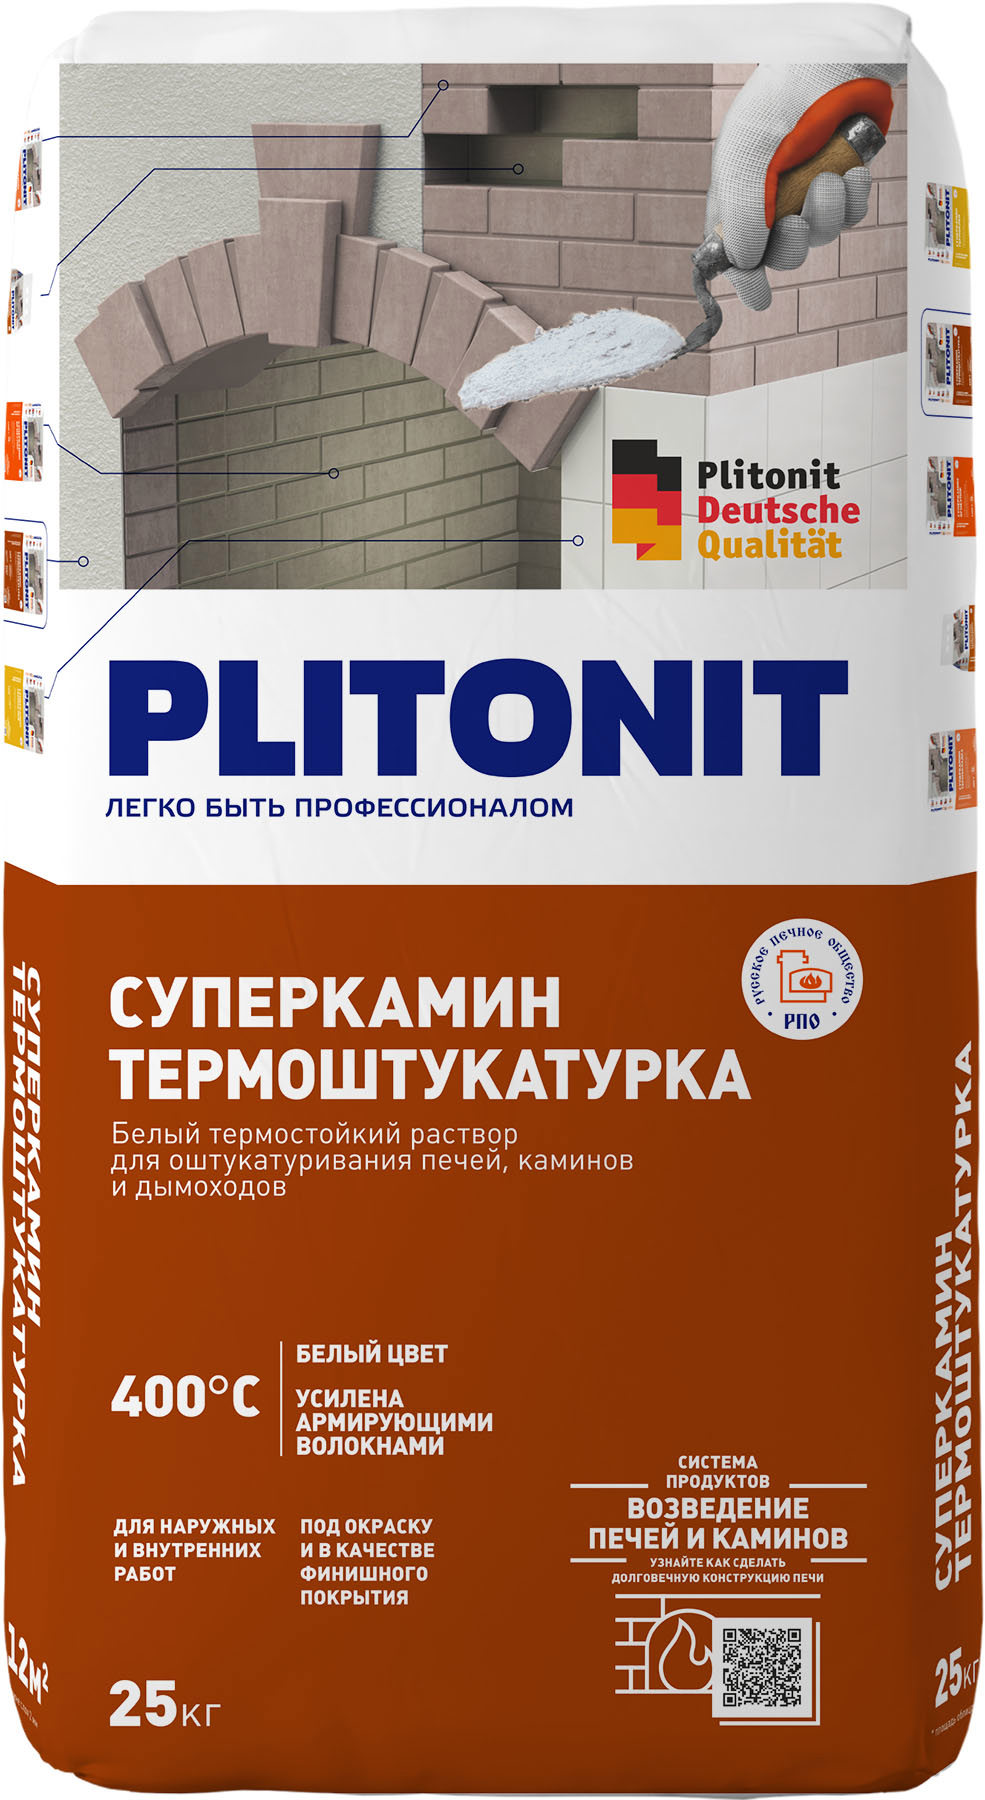 82402057 Штукатурка цементная Плитонит СуперКамин белая 25 кг STLM-0026542 PLITONIT